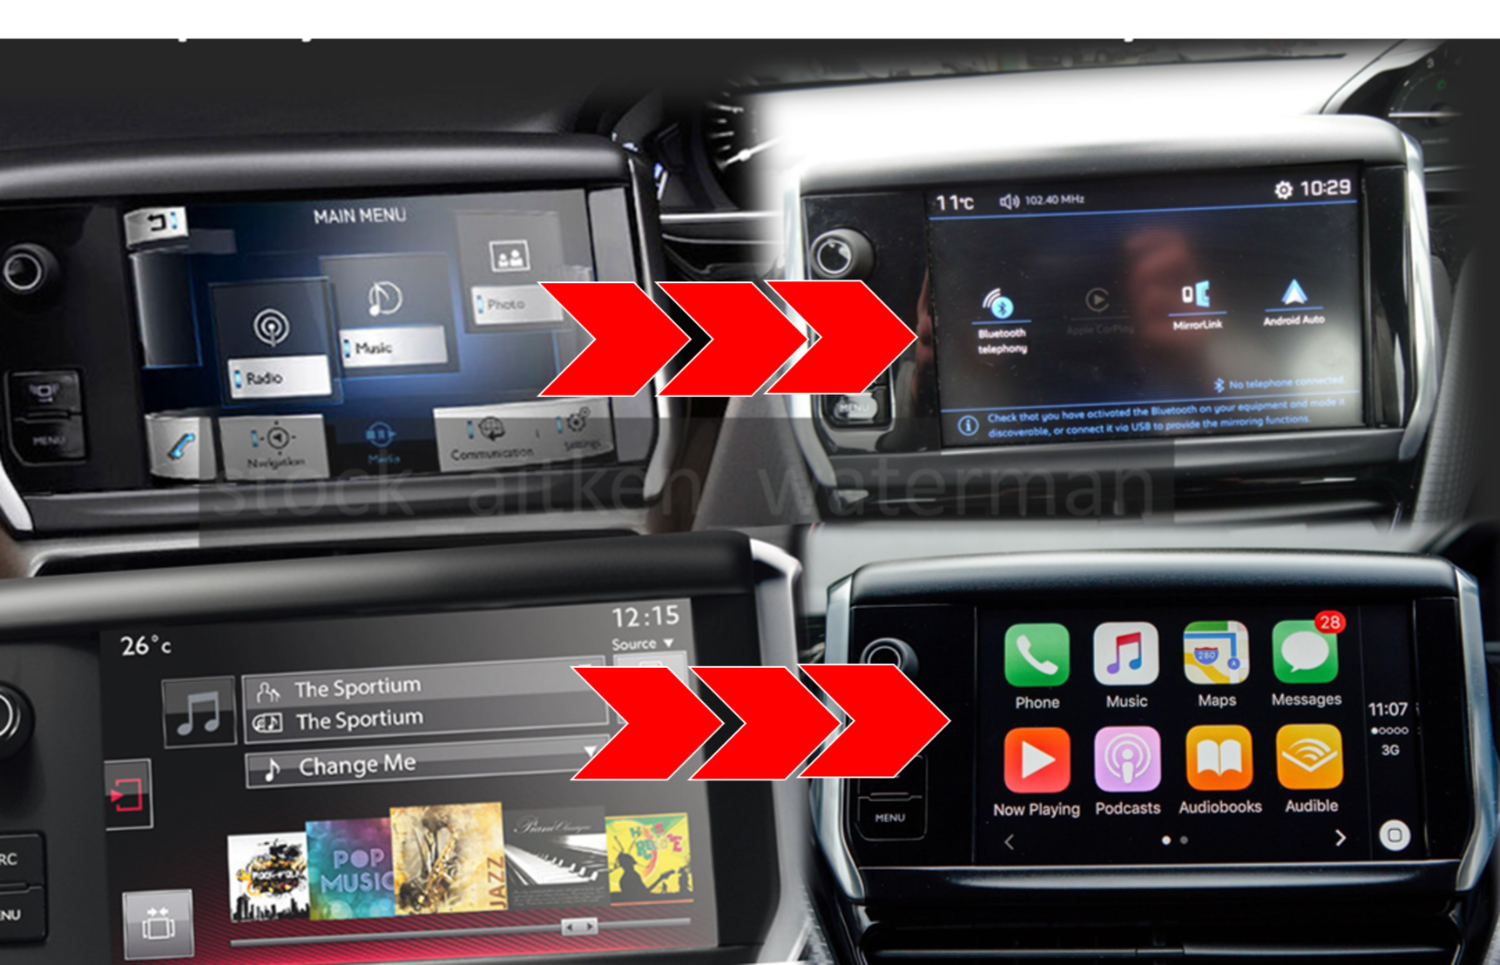 Peugeot 208 Apple Car Play hardware upgrade